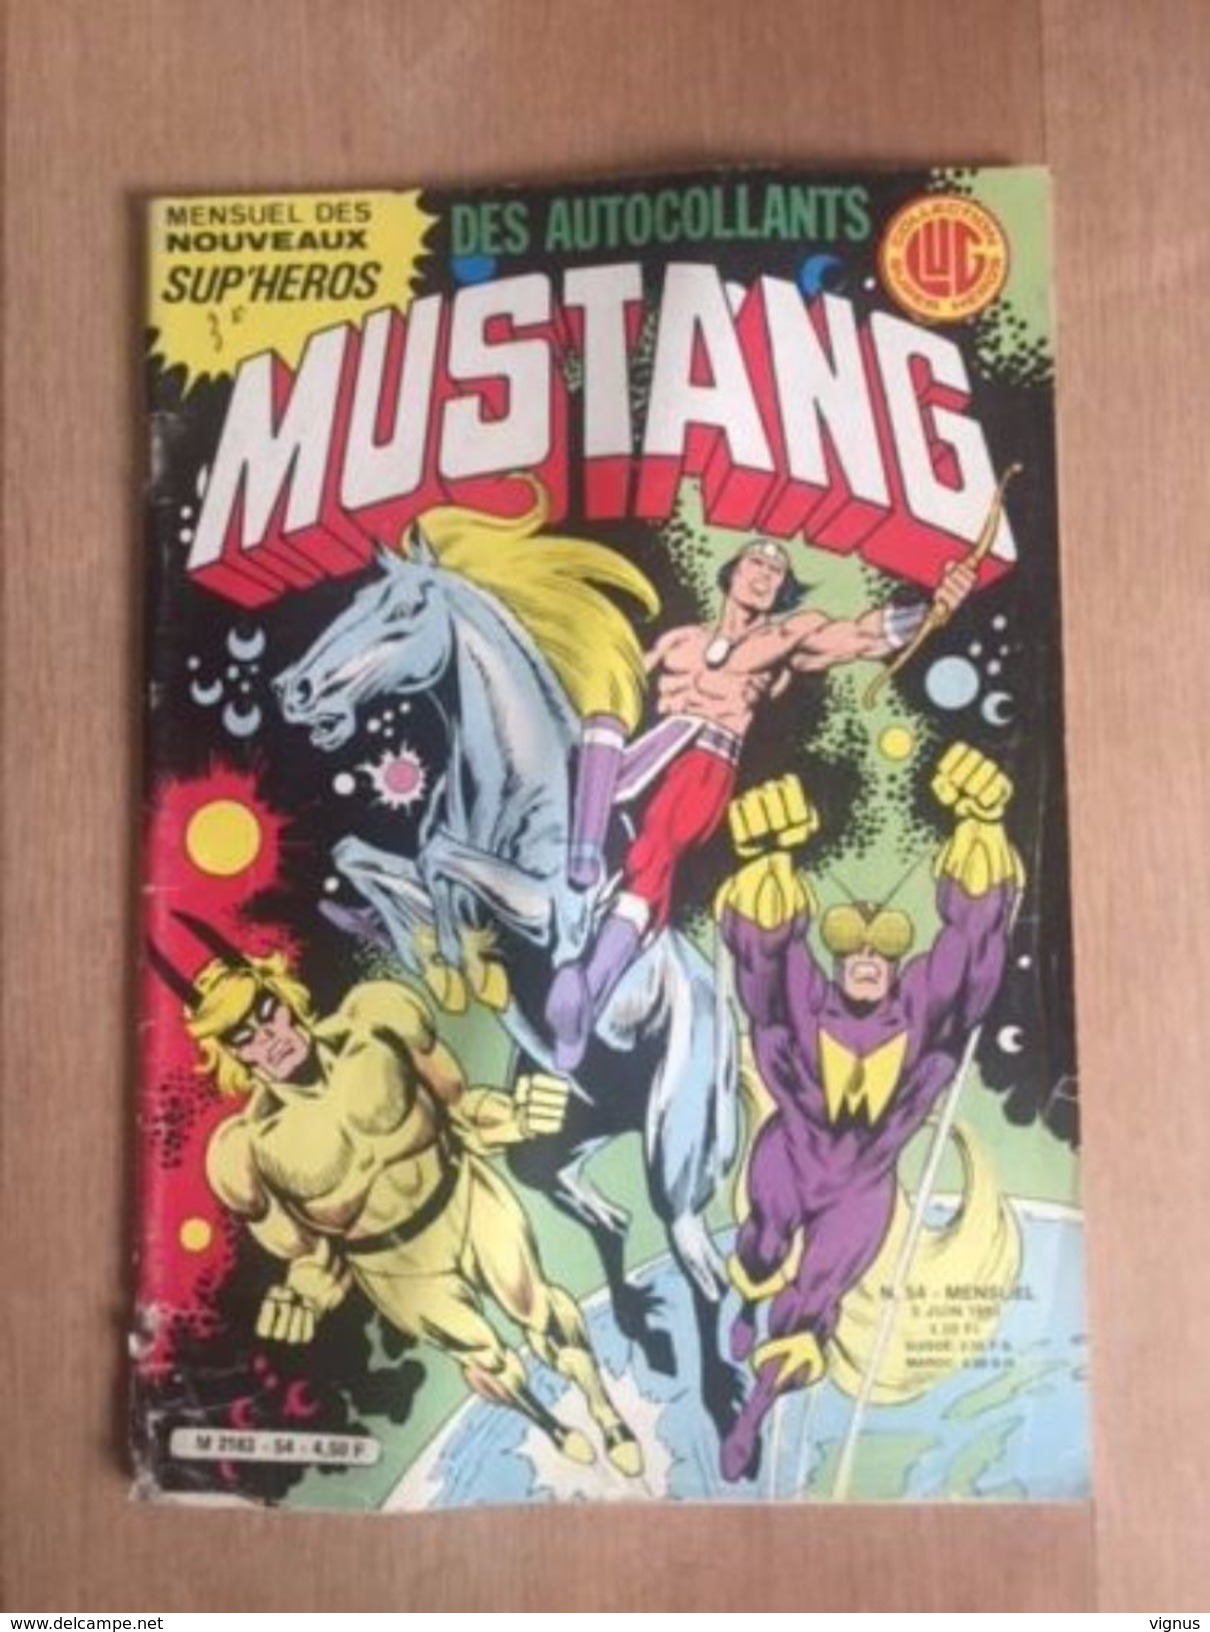 MUSTANG N°   54 (MIKROS) - EDITIONS LUG - JUIN 1980 - BON ETAT (AUTOICOLLANTS NON INCLUS) - Mustang